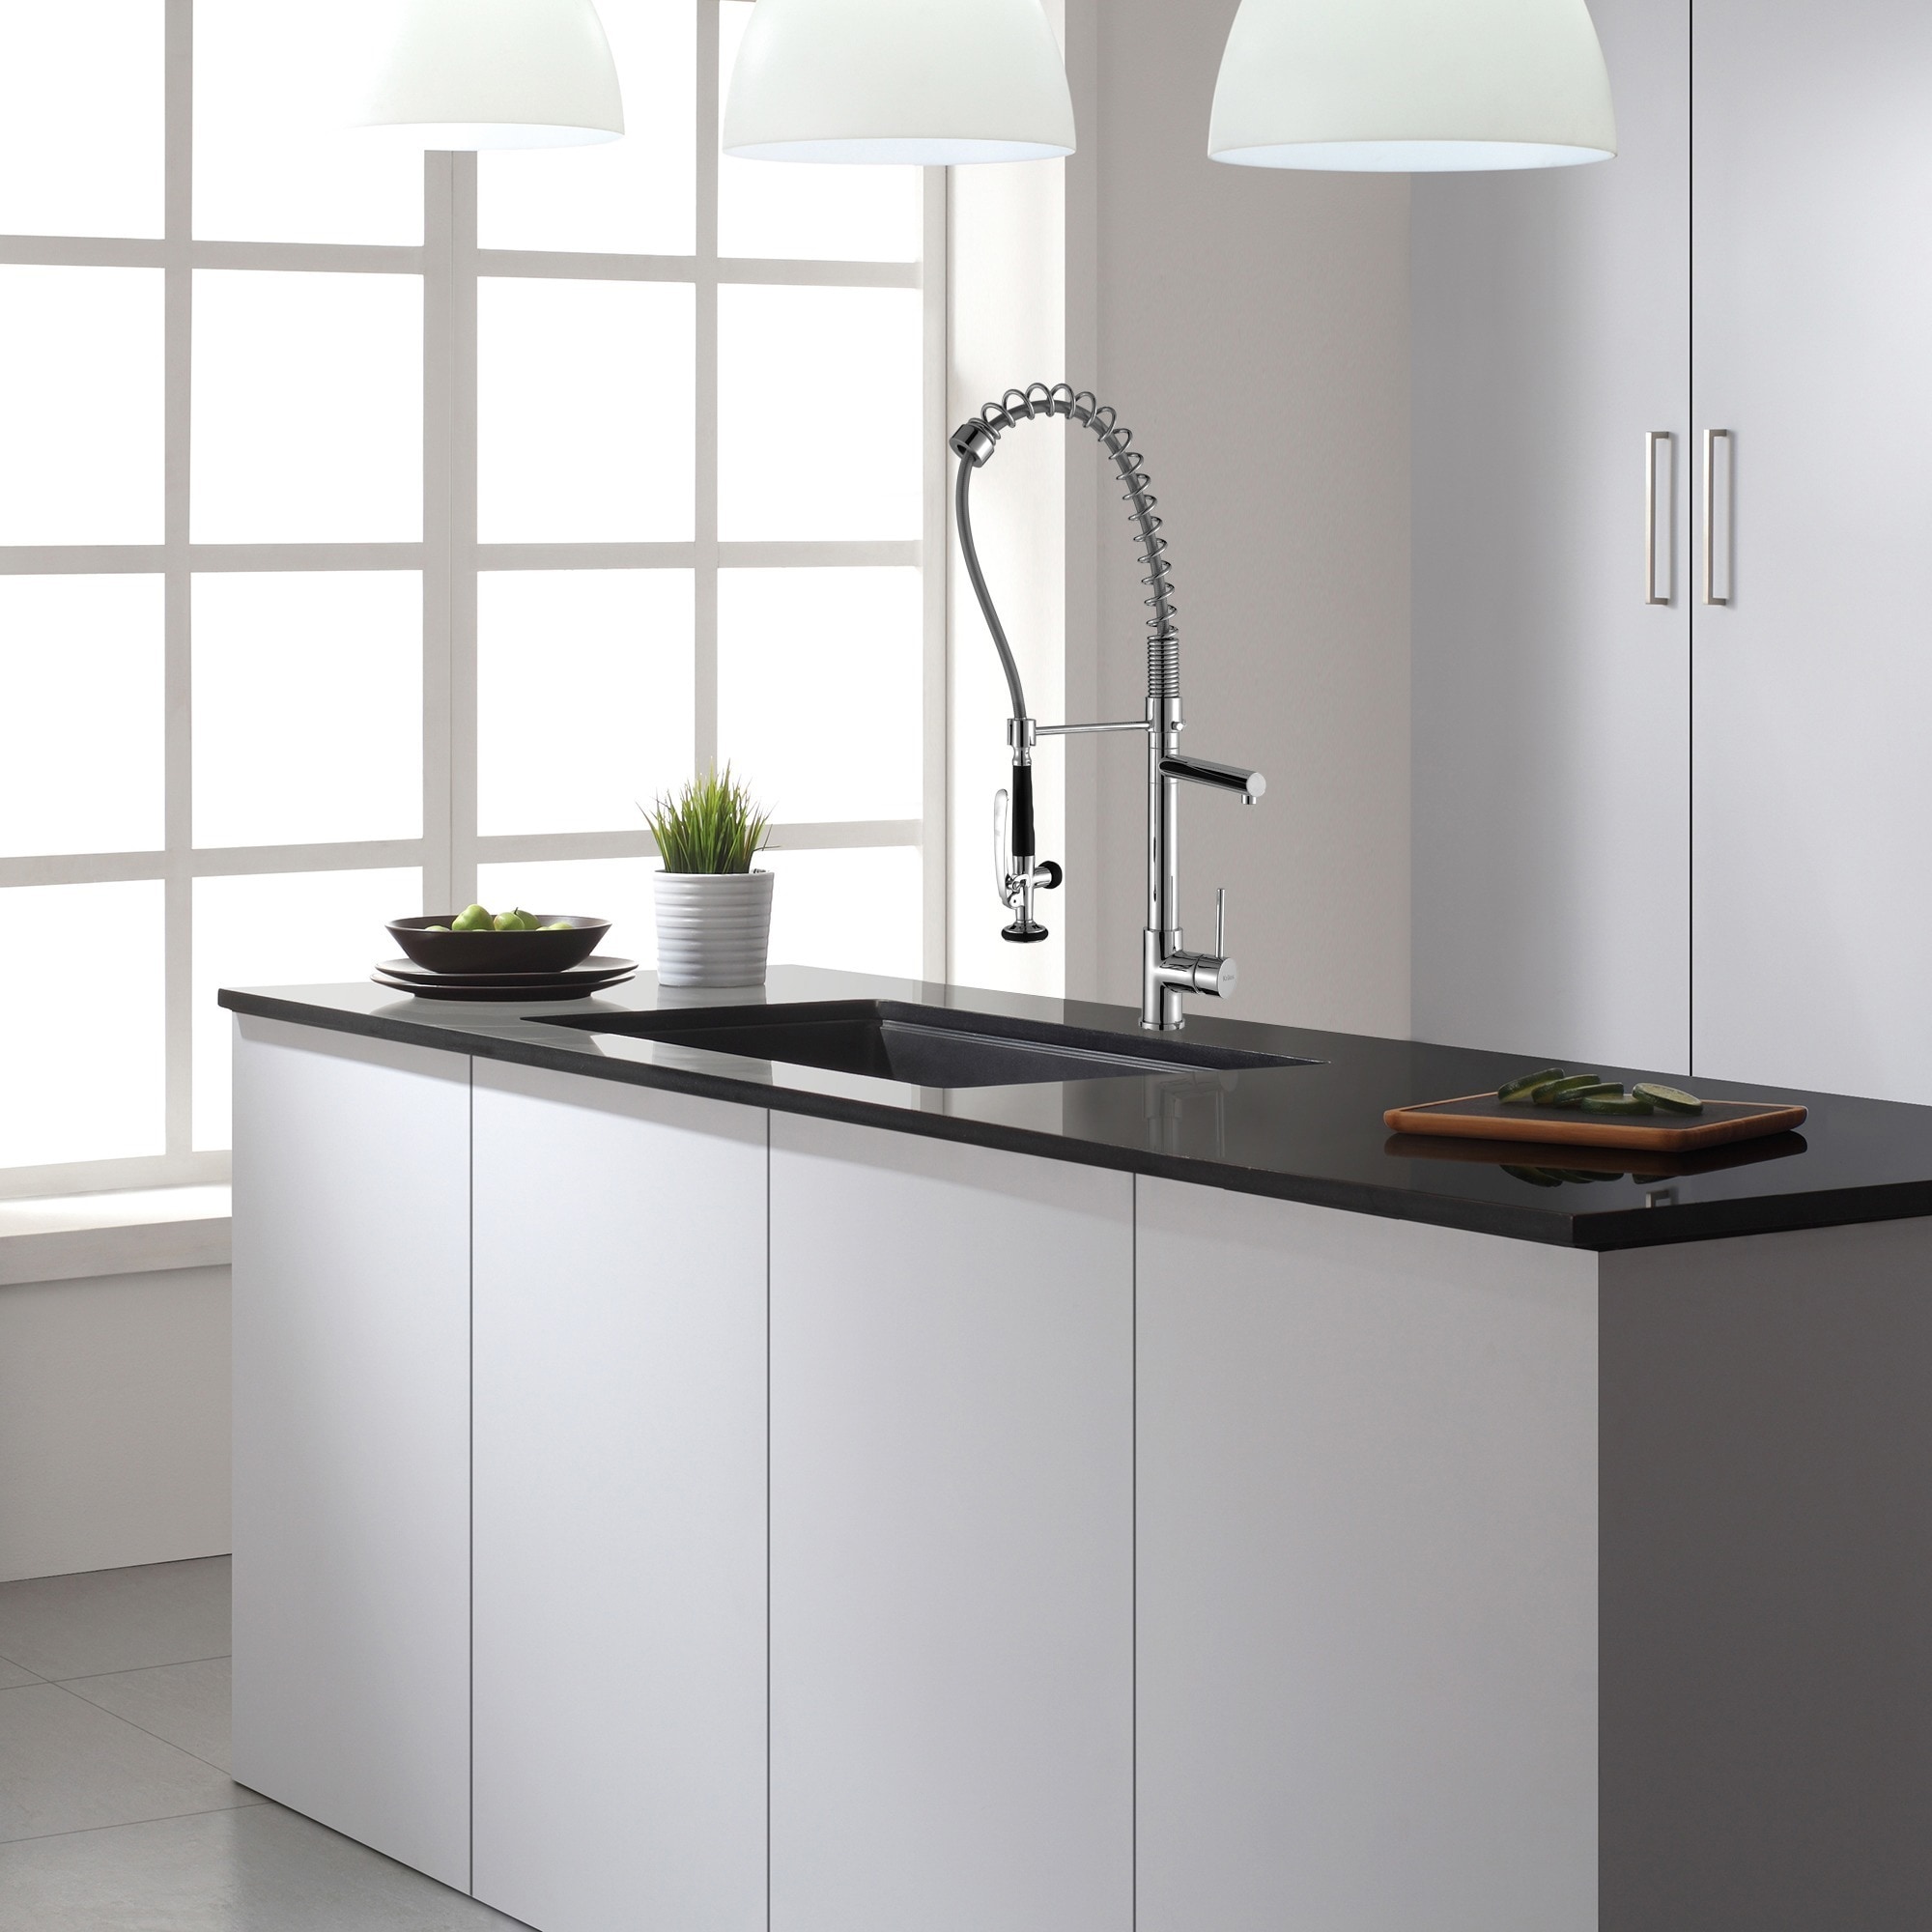 https://ak1.ostkcdn.com/images/products/8844063/KRAUS-31-inch-Undermount-Single-Bowl-Black-Onyx-Granite-Kitchen-Sink-37356c8c-b66d-469c-81f2-dbc66229089f.jpg